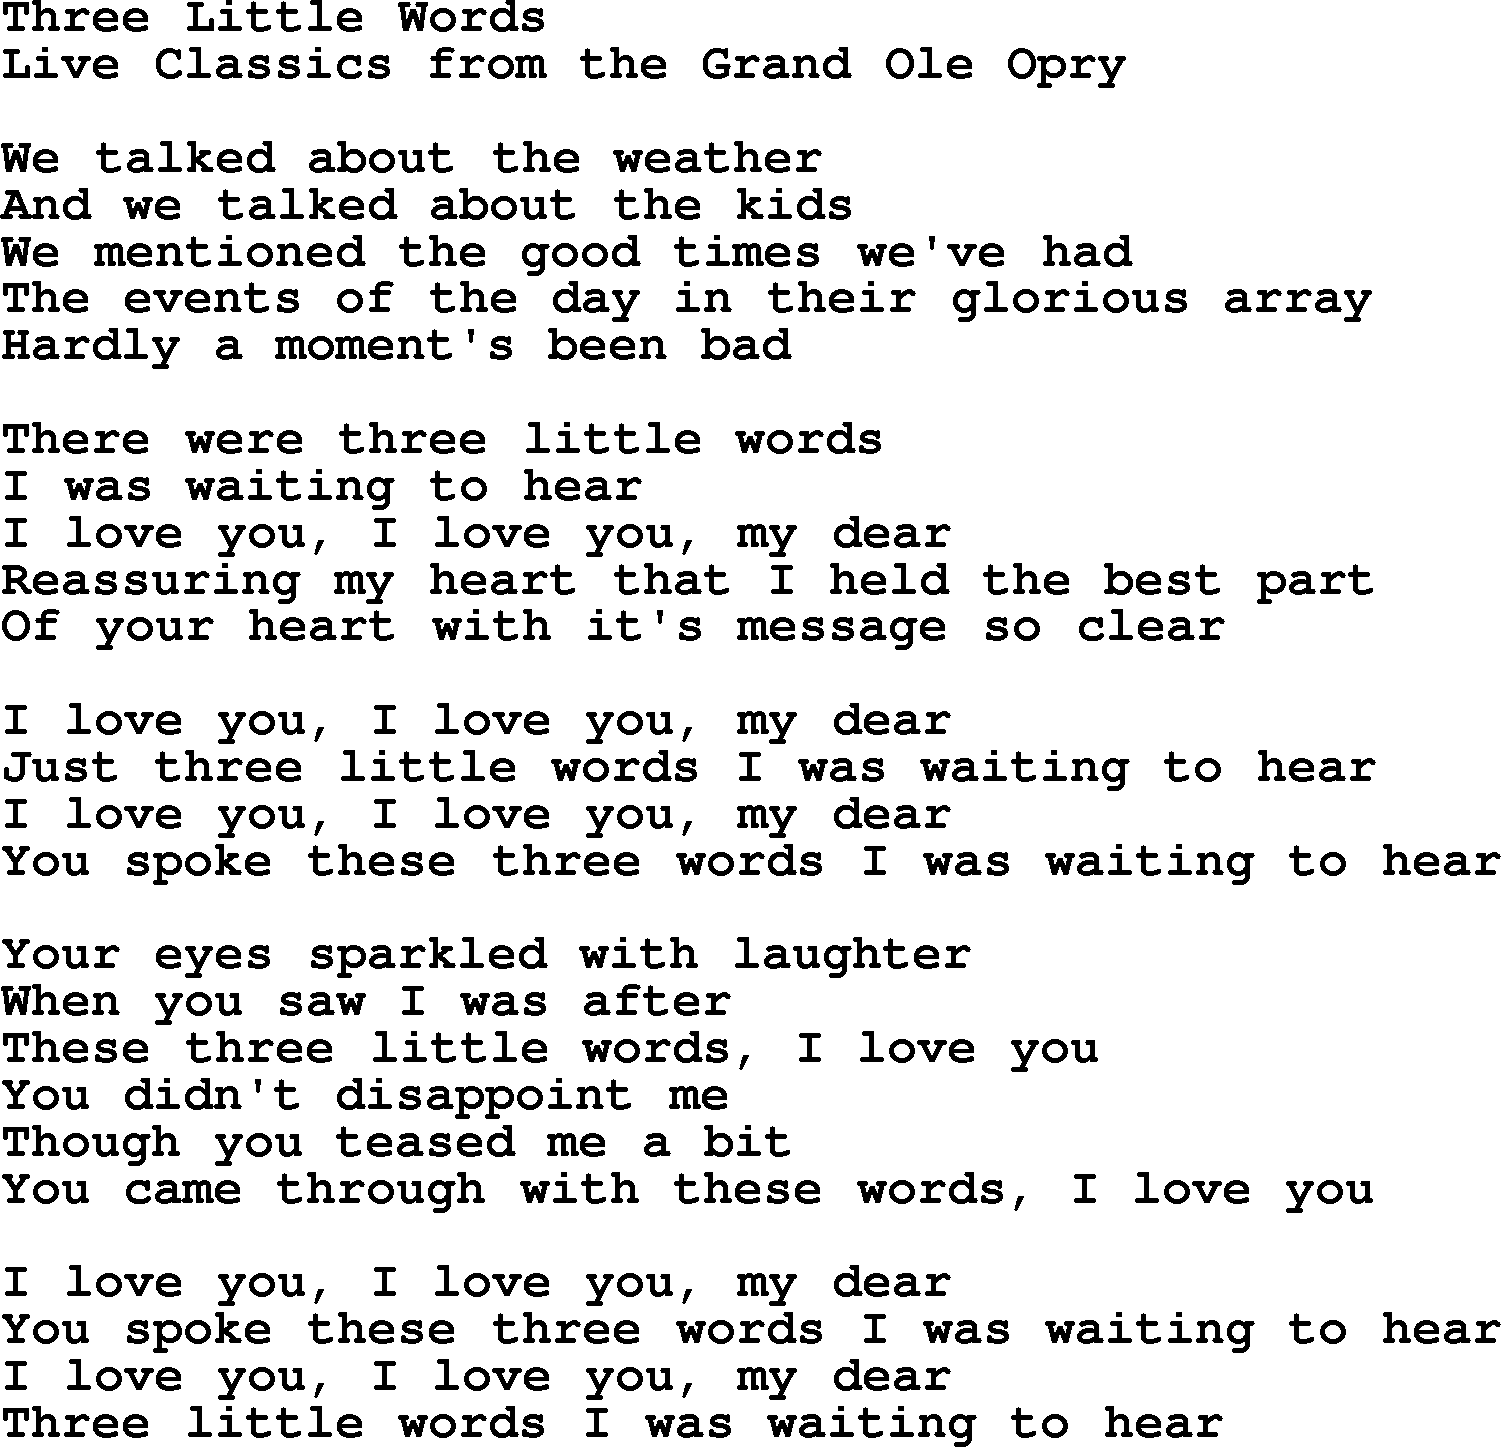 Marty Robbins song: Three Little Words, lyrics